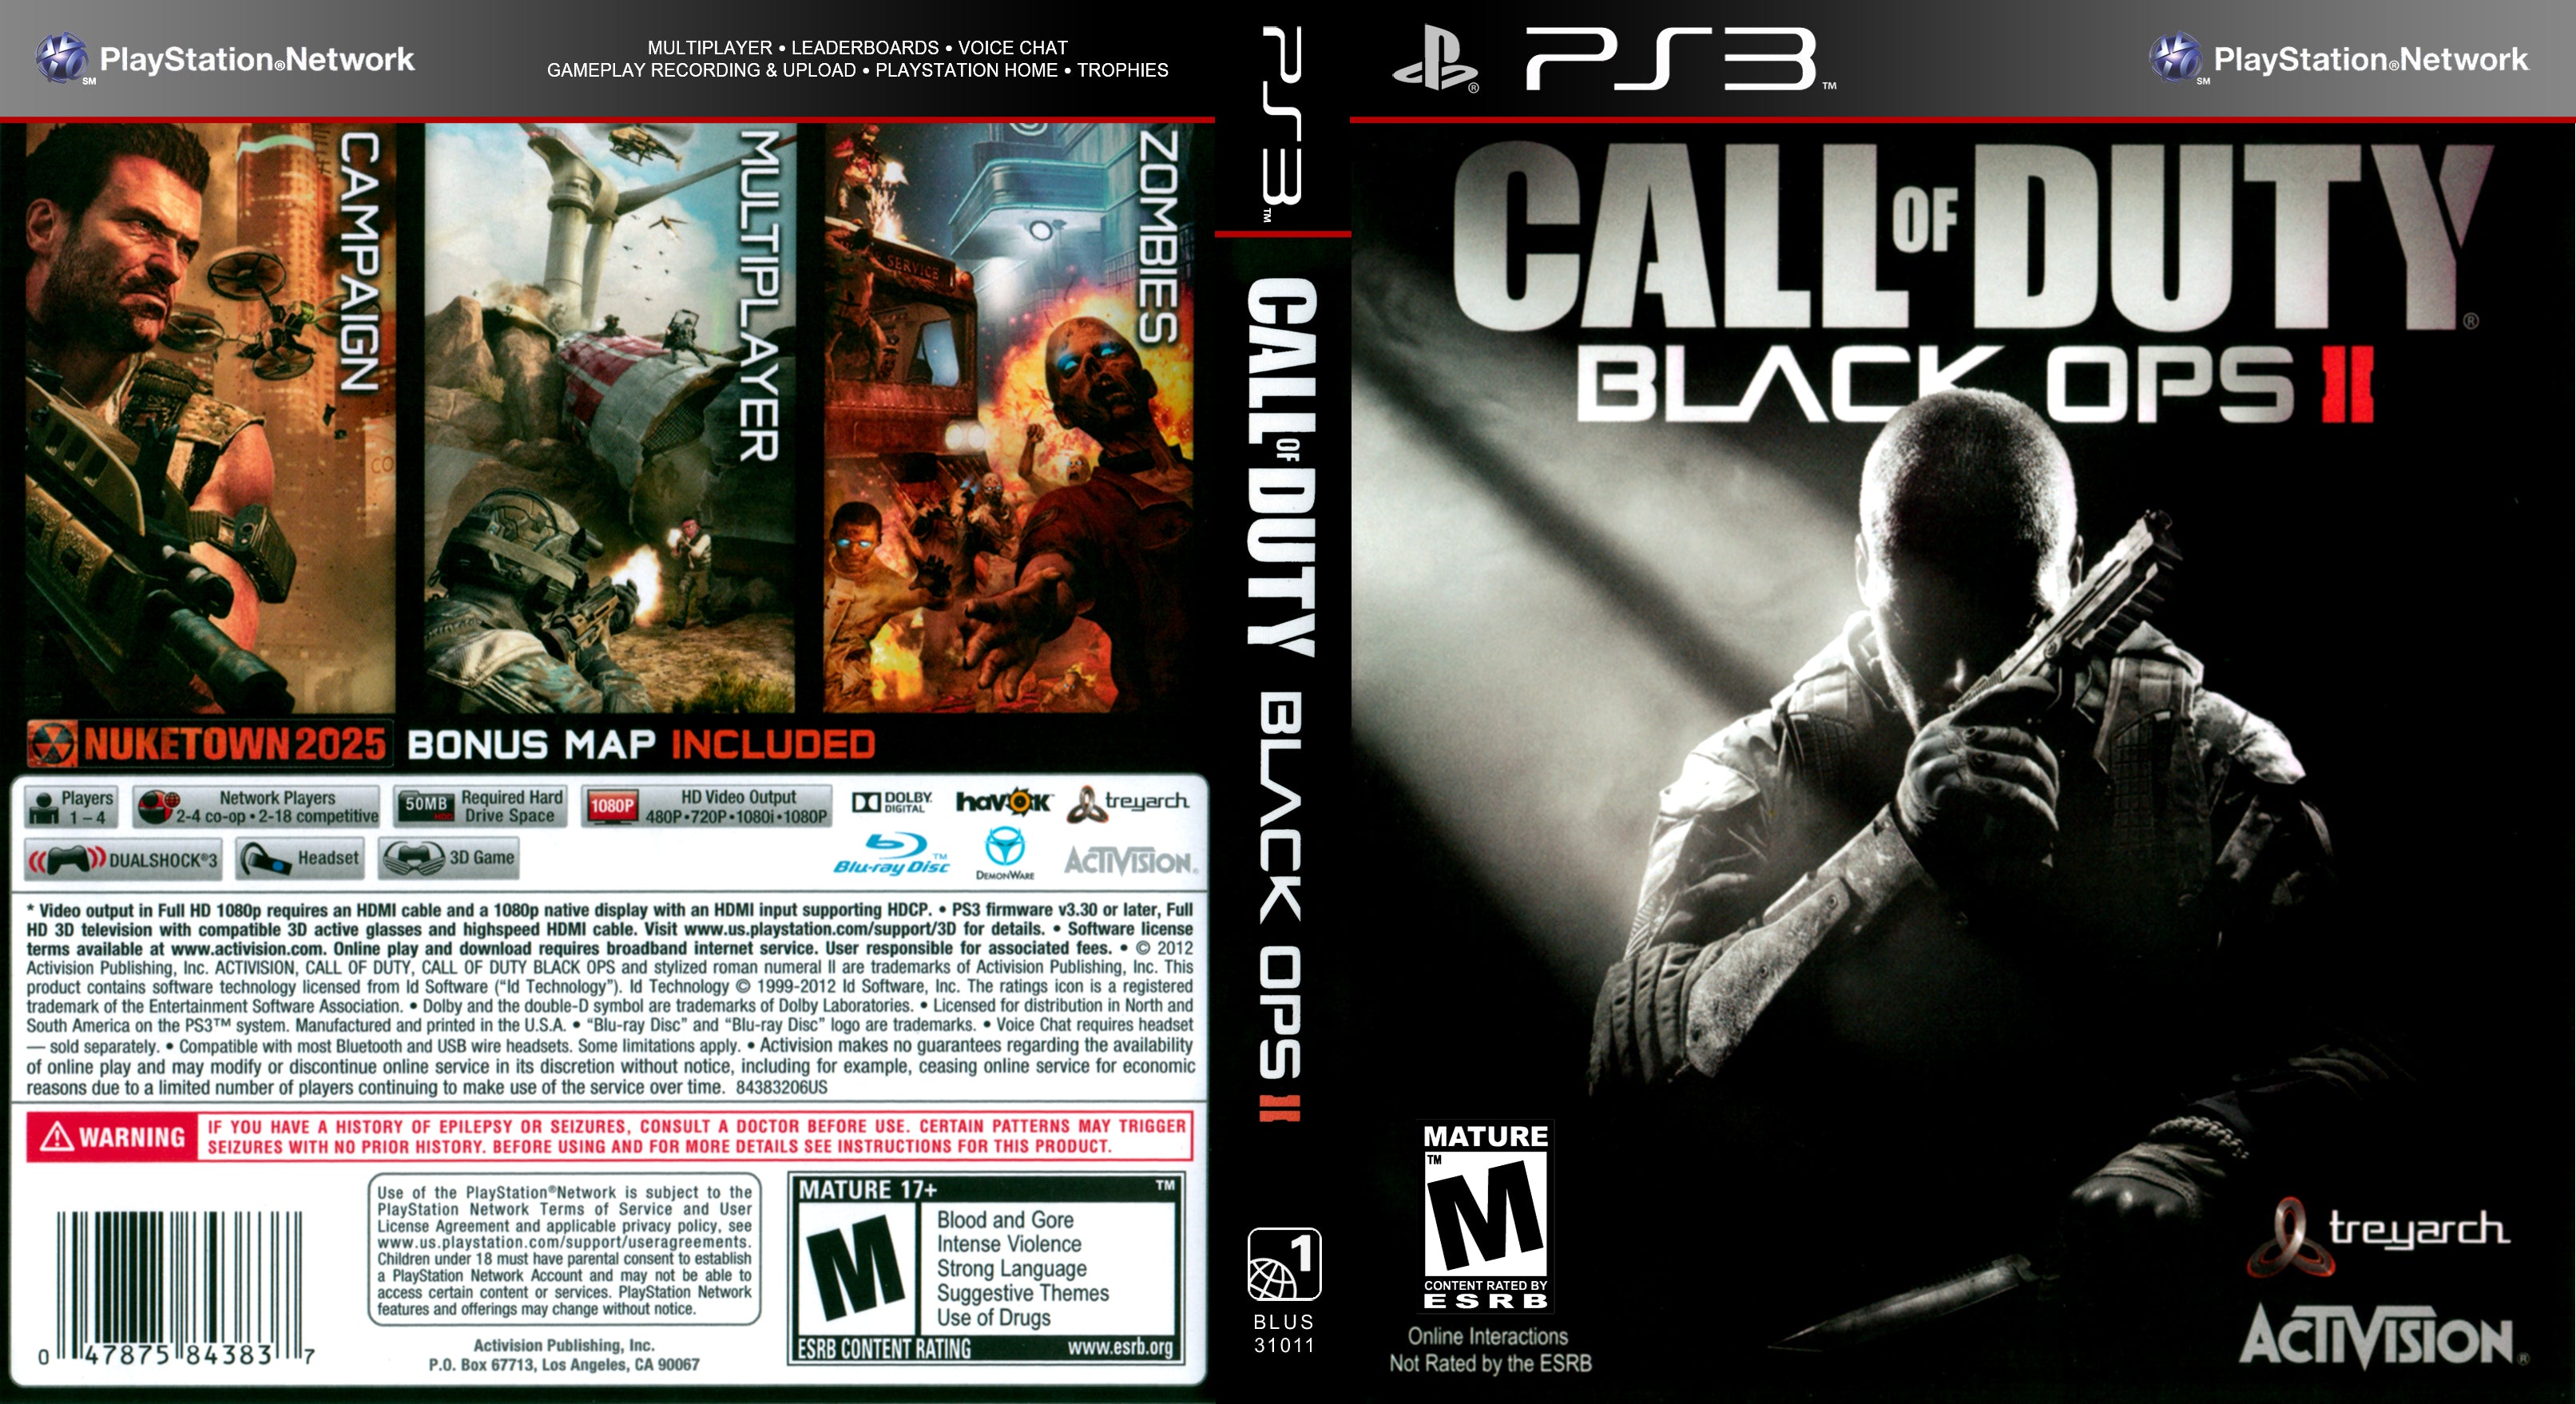 Black Ops 2, Call of Duty: Black Ops II